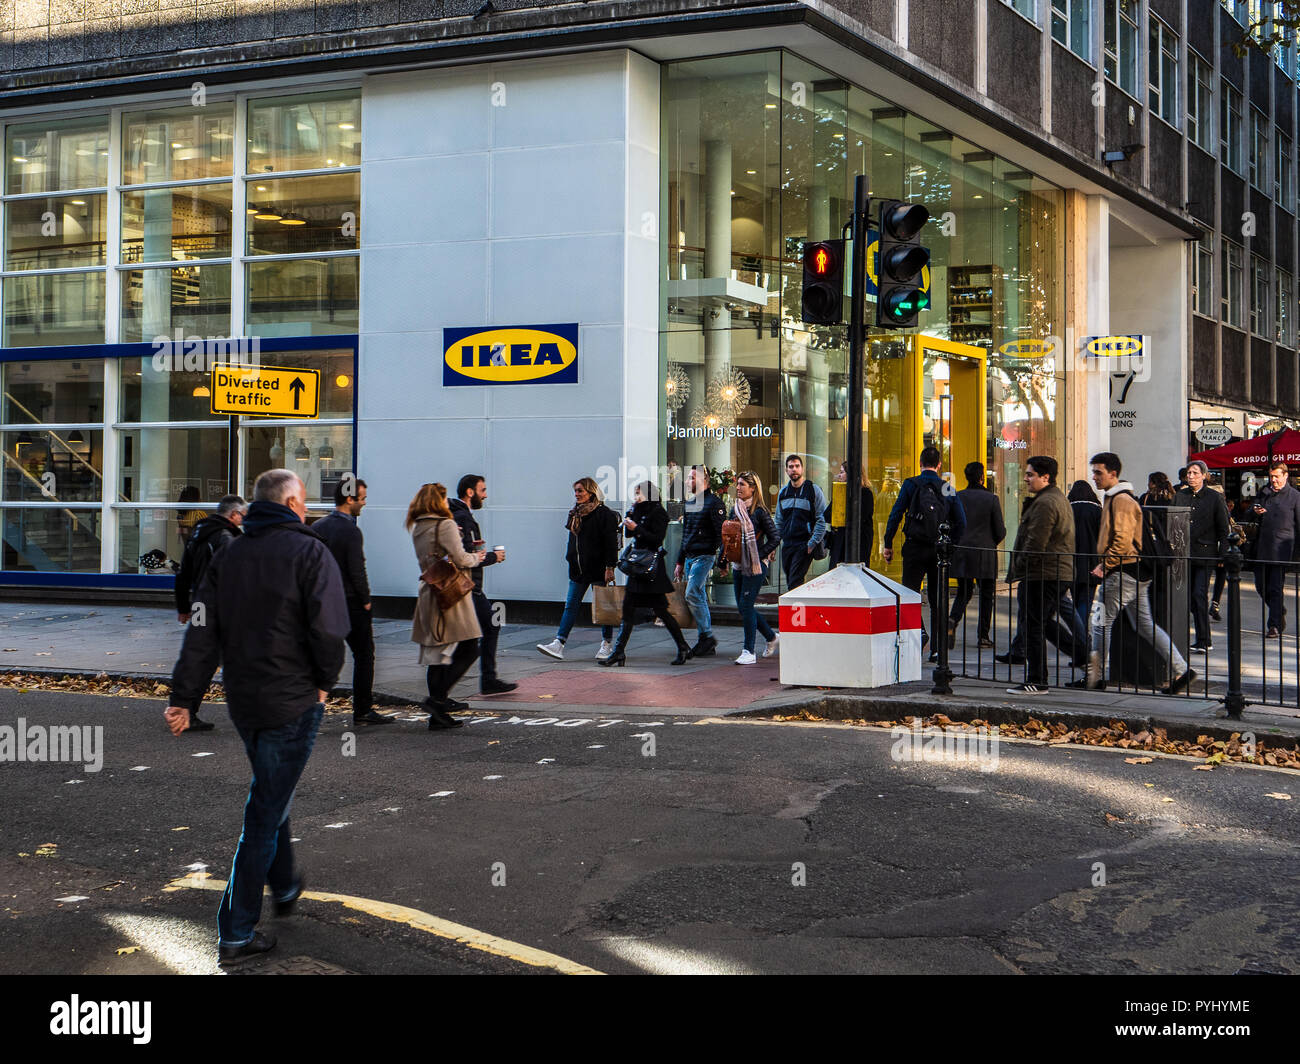 Ikea Mini Store - Ikea Ikea Central London Tottenham Court Road - Die IKEA Design und Planung Store in London, Großbritannien Stockfoto